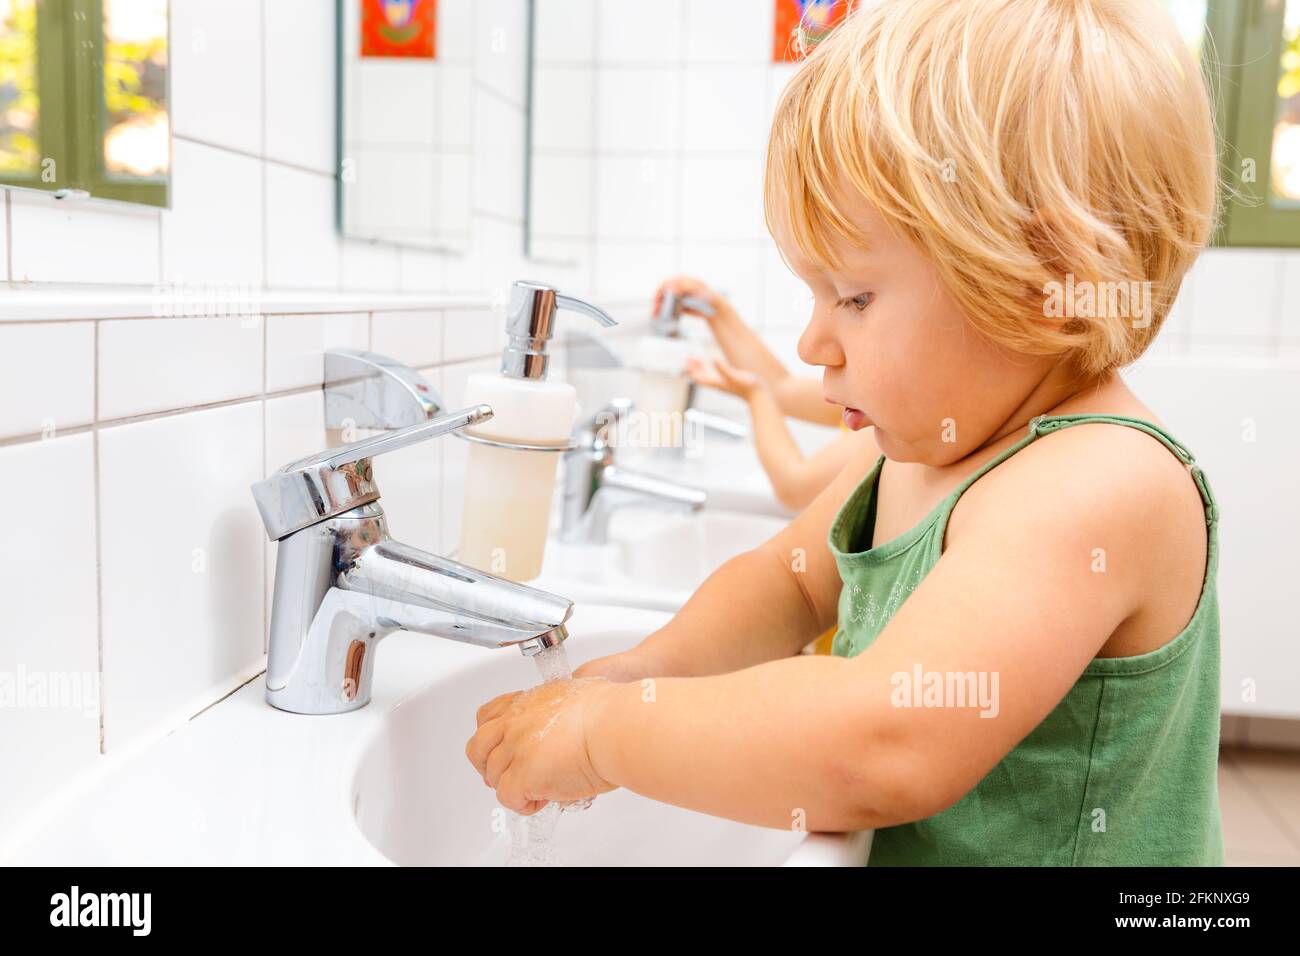 Child in kindergarten washing her hands Stock Photo